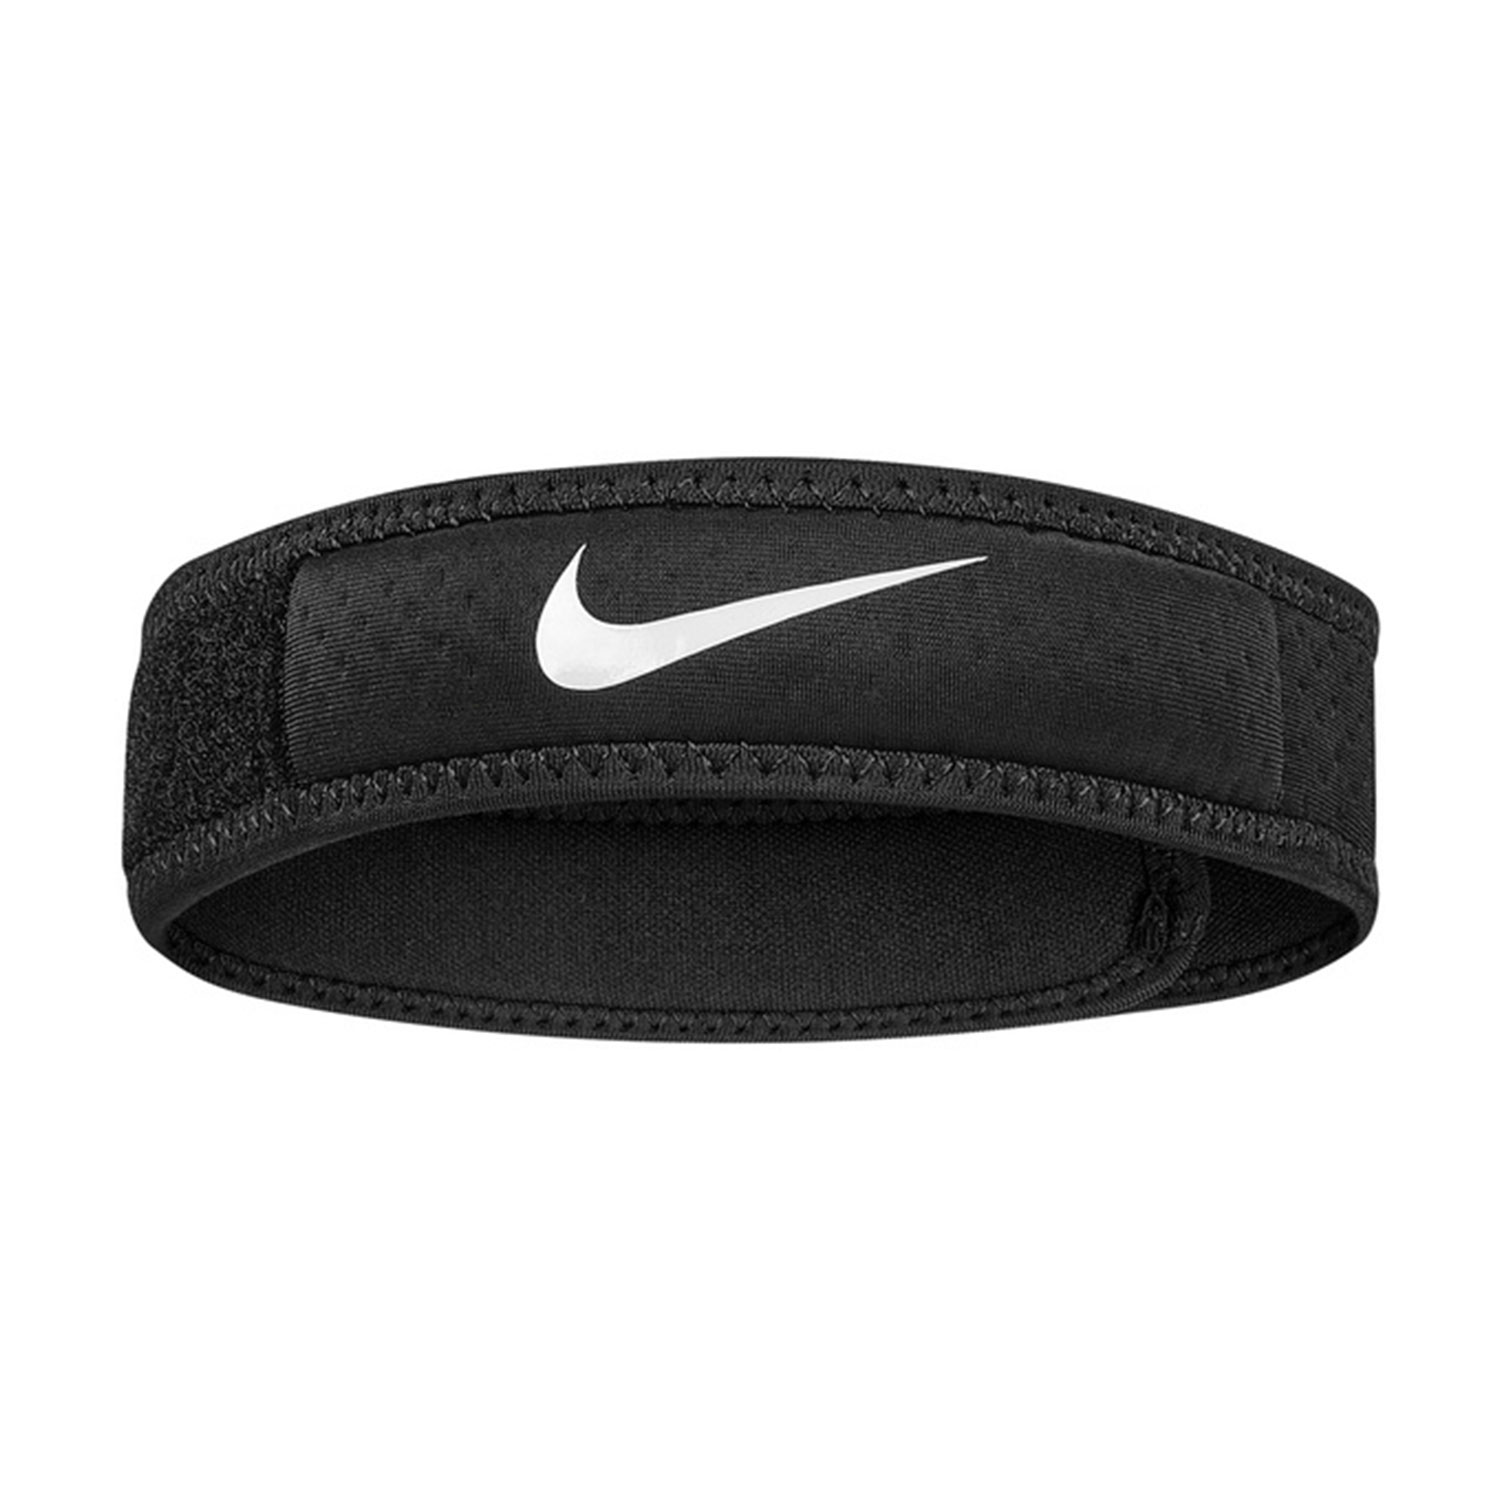 Nike Pro 3.0 Patella Band - Black/White